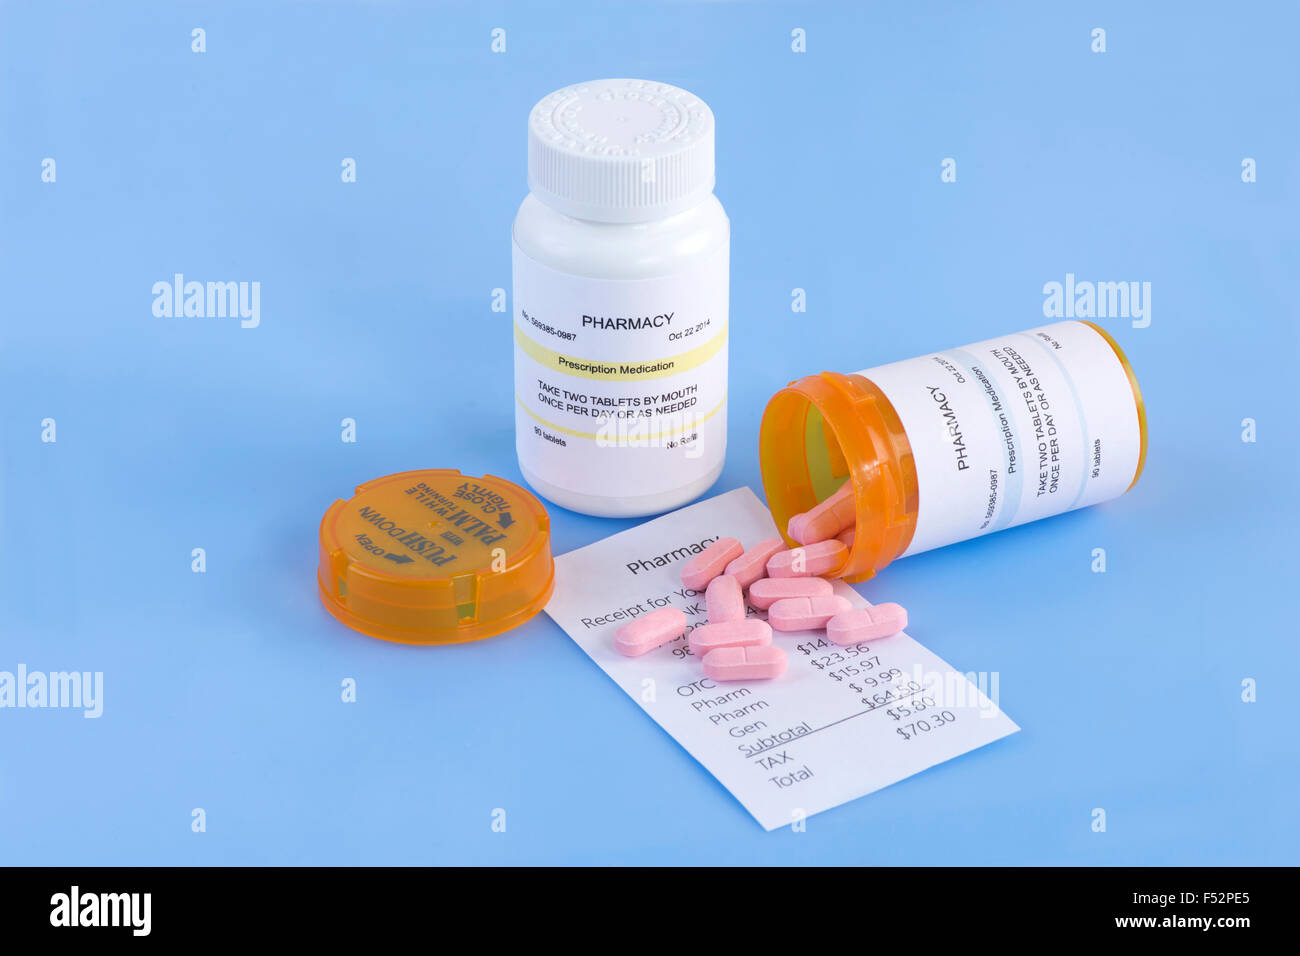 Prescription bottles, pills and pharmacy receipt on blue  background. Stock Photo